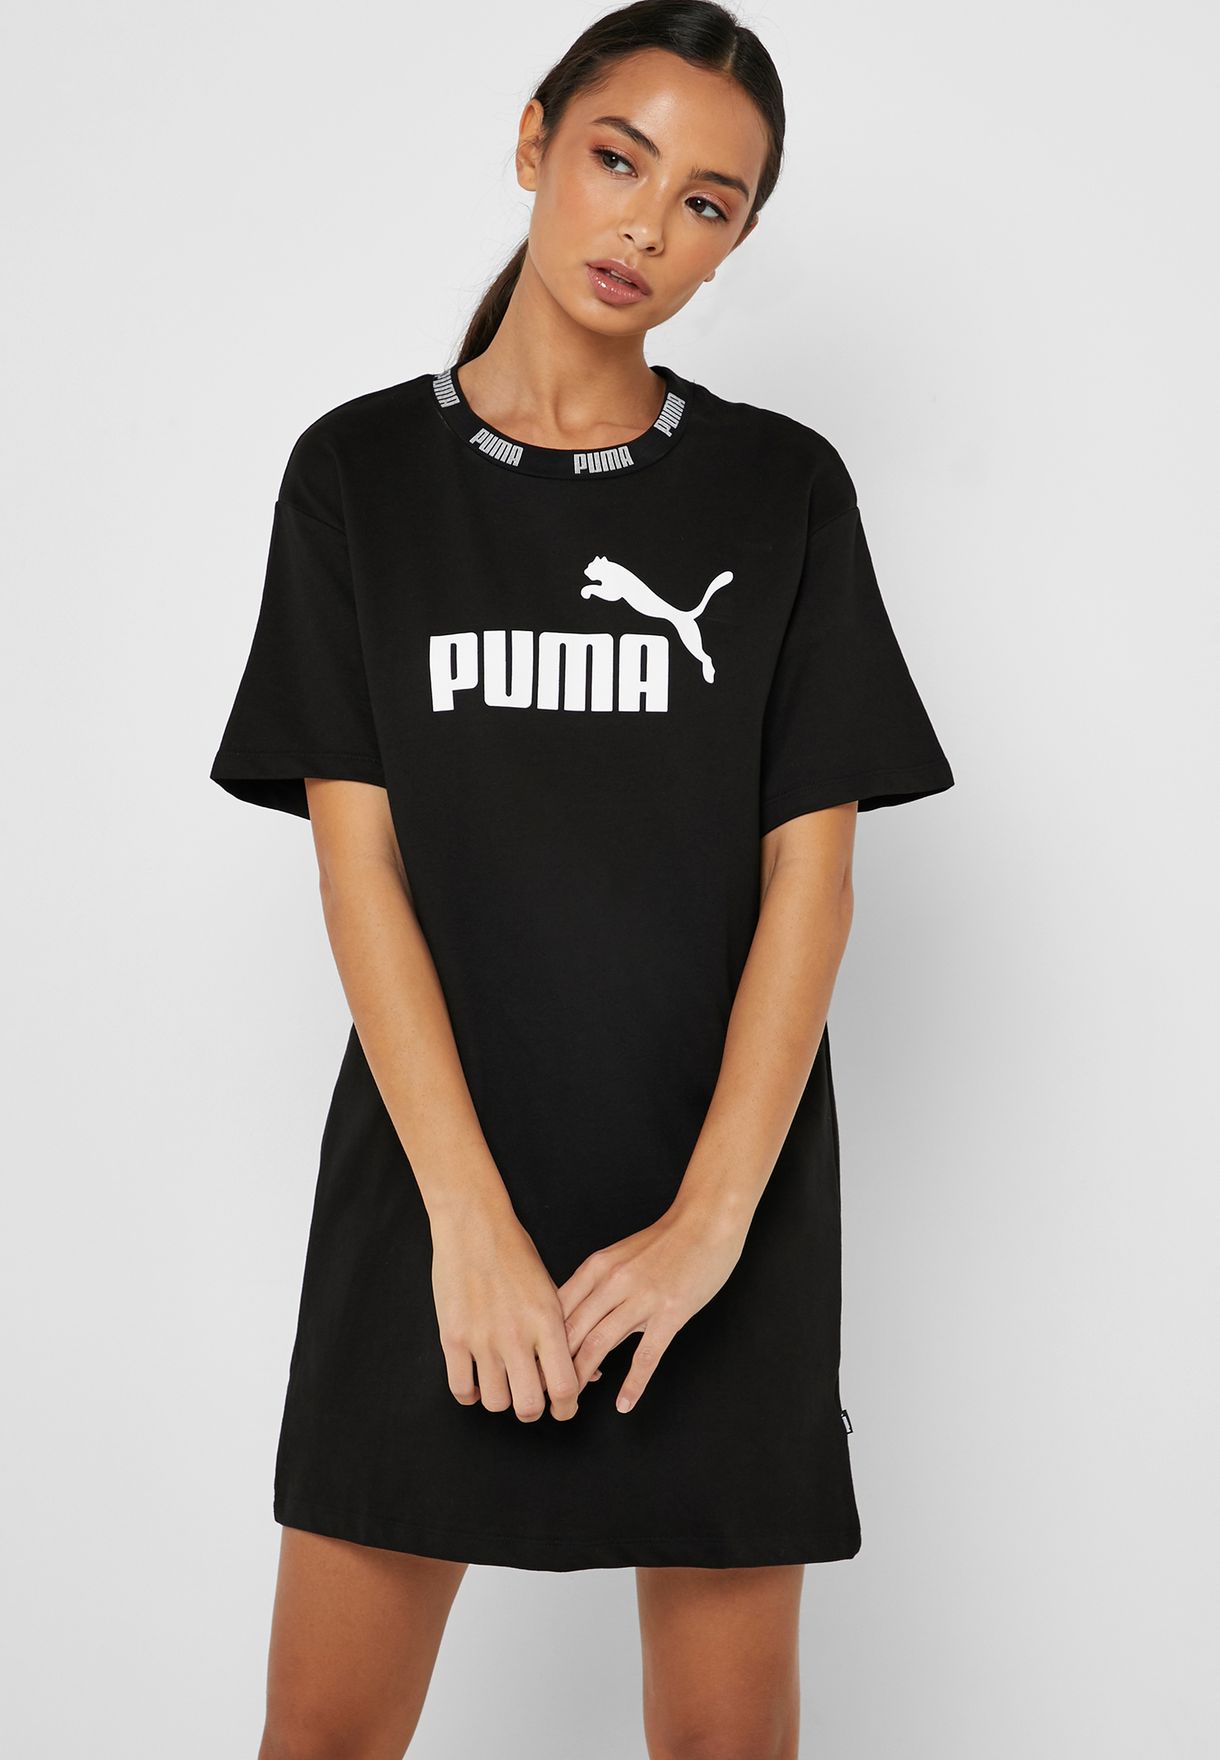 where can i buy puma clothing